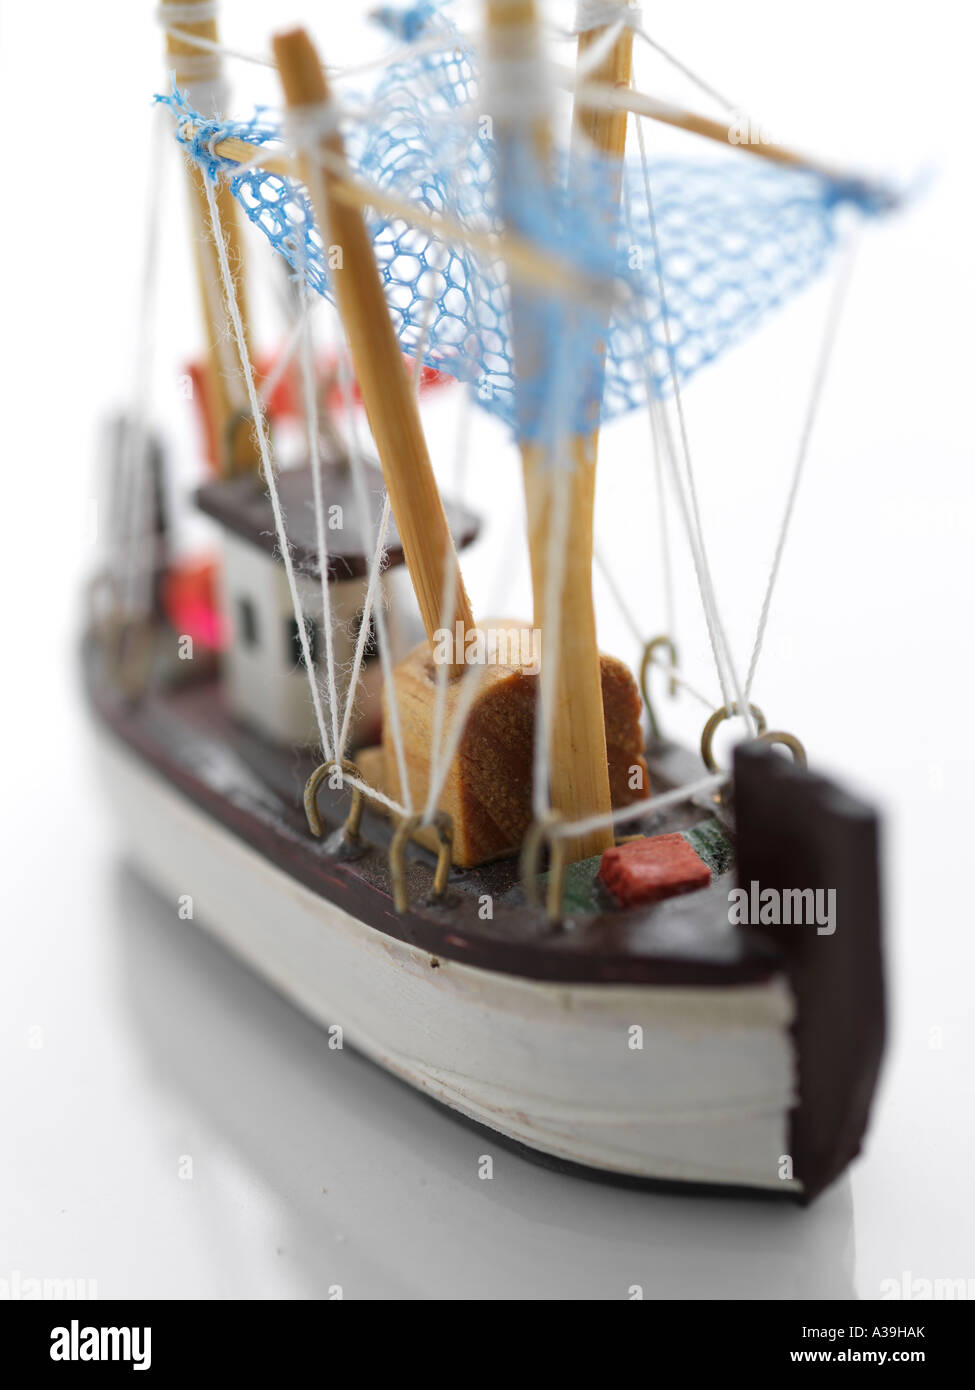 https://c8.alamy.com/comp/A39HAK/model-ship-ornament-wood-handicraft-souvenir-small-toy-detailed-miniature-A39HAK.jpg